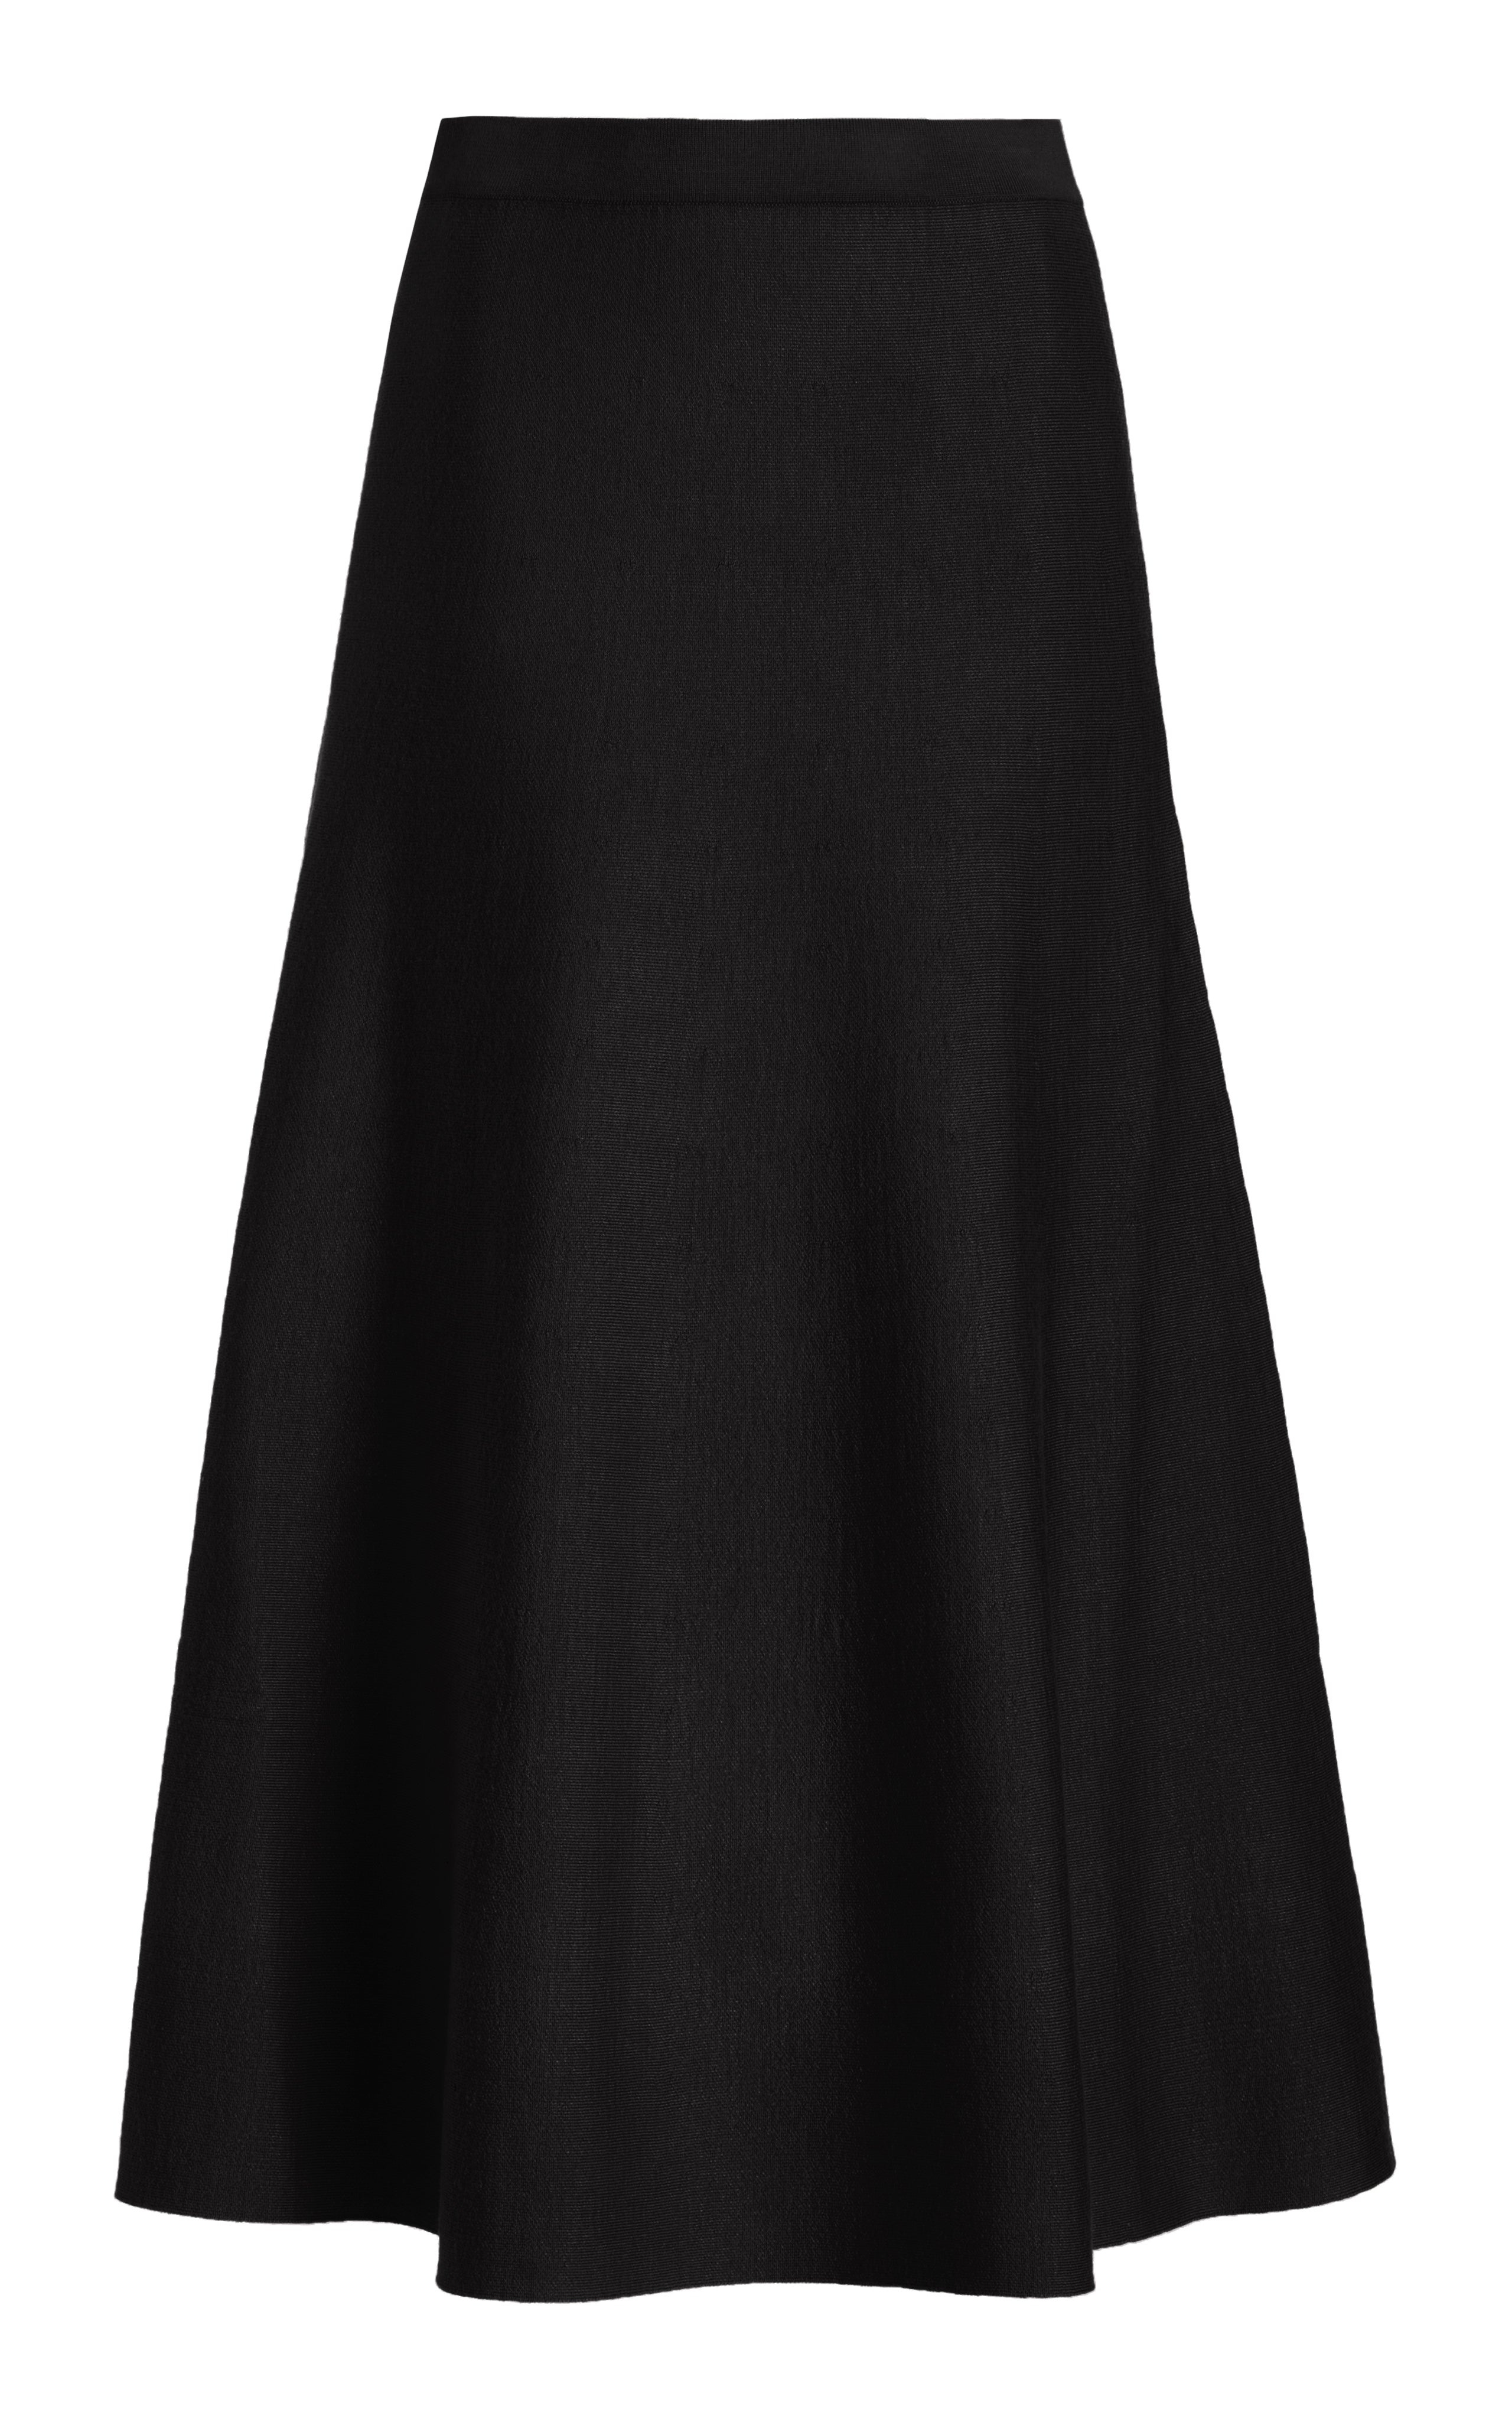 Freddie Skirt in Black Cashmere Wool - 1